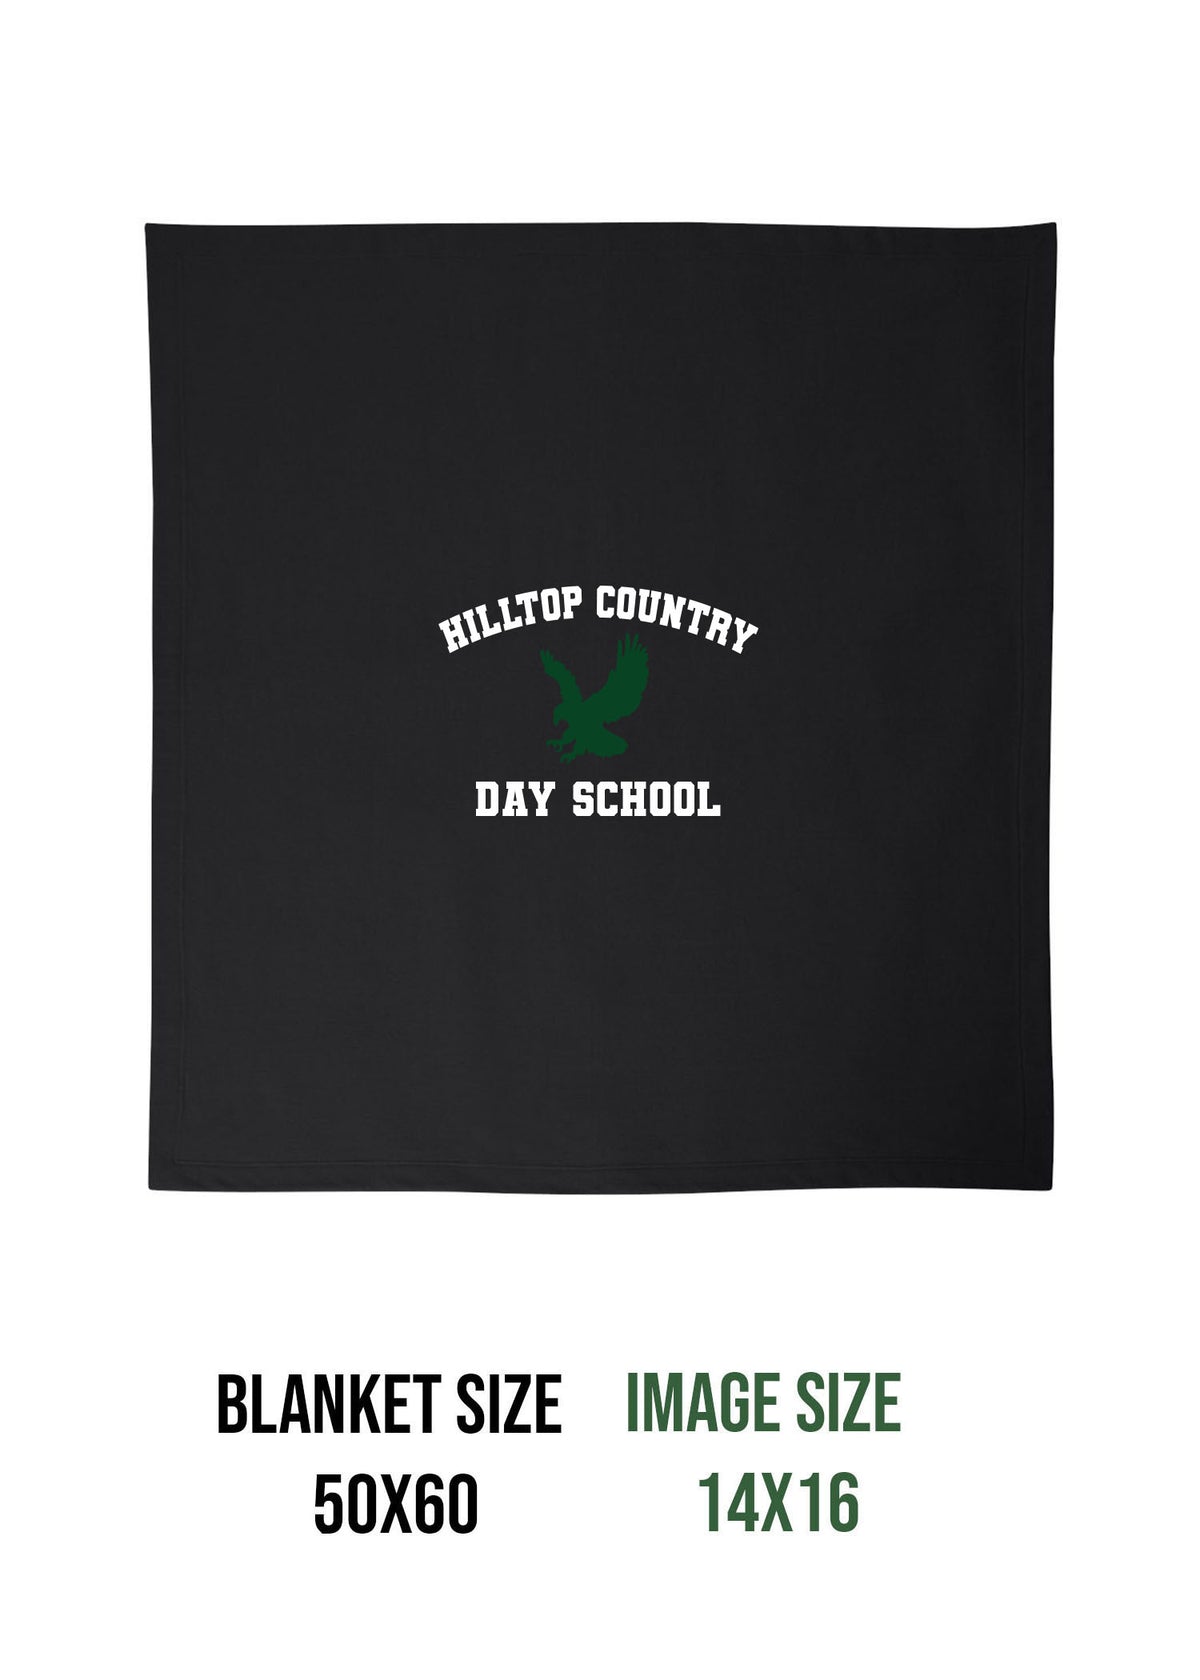 Hilltop Country Day School Design 1 Blanket